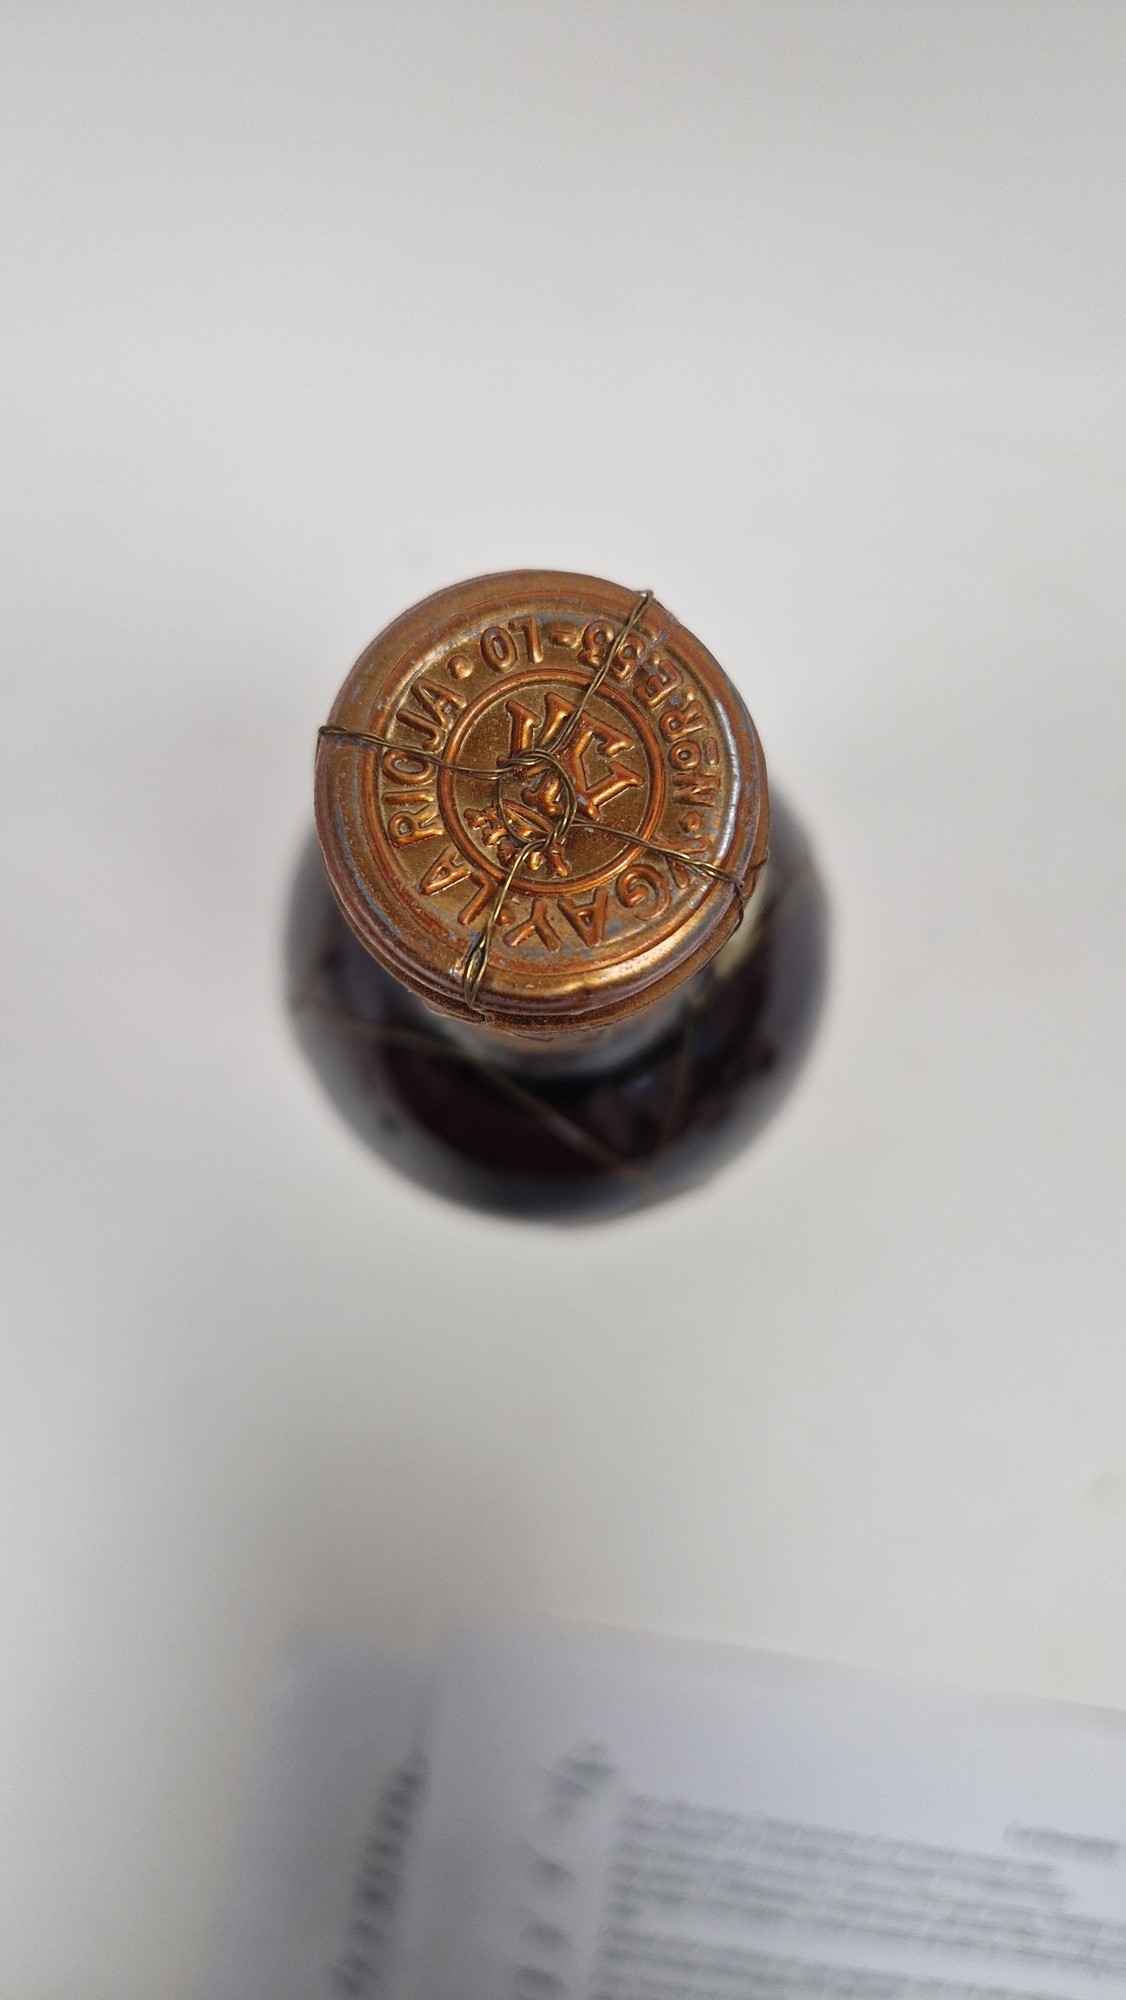 Bottle of Bodegas Marques de Murrieta Castillo Ygay Gran Reserva 1962 rioja (low neck)  Condition - Image 4 of 5